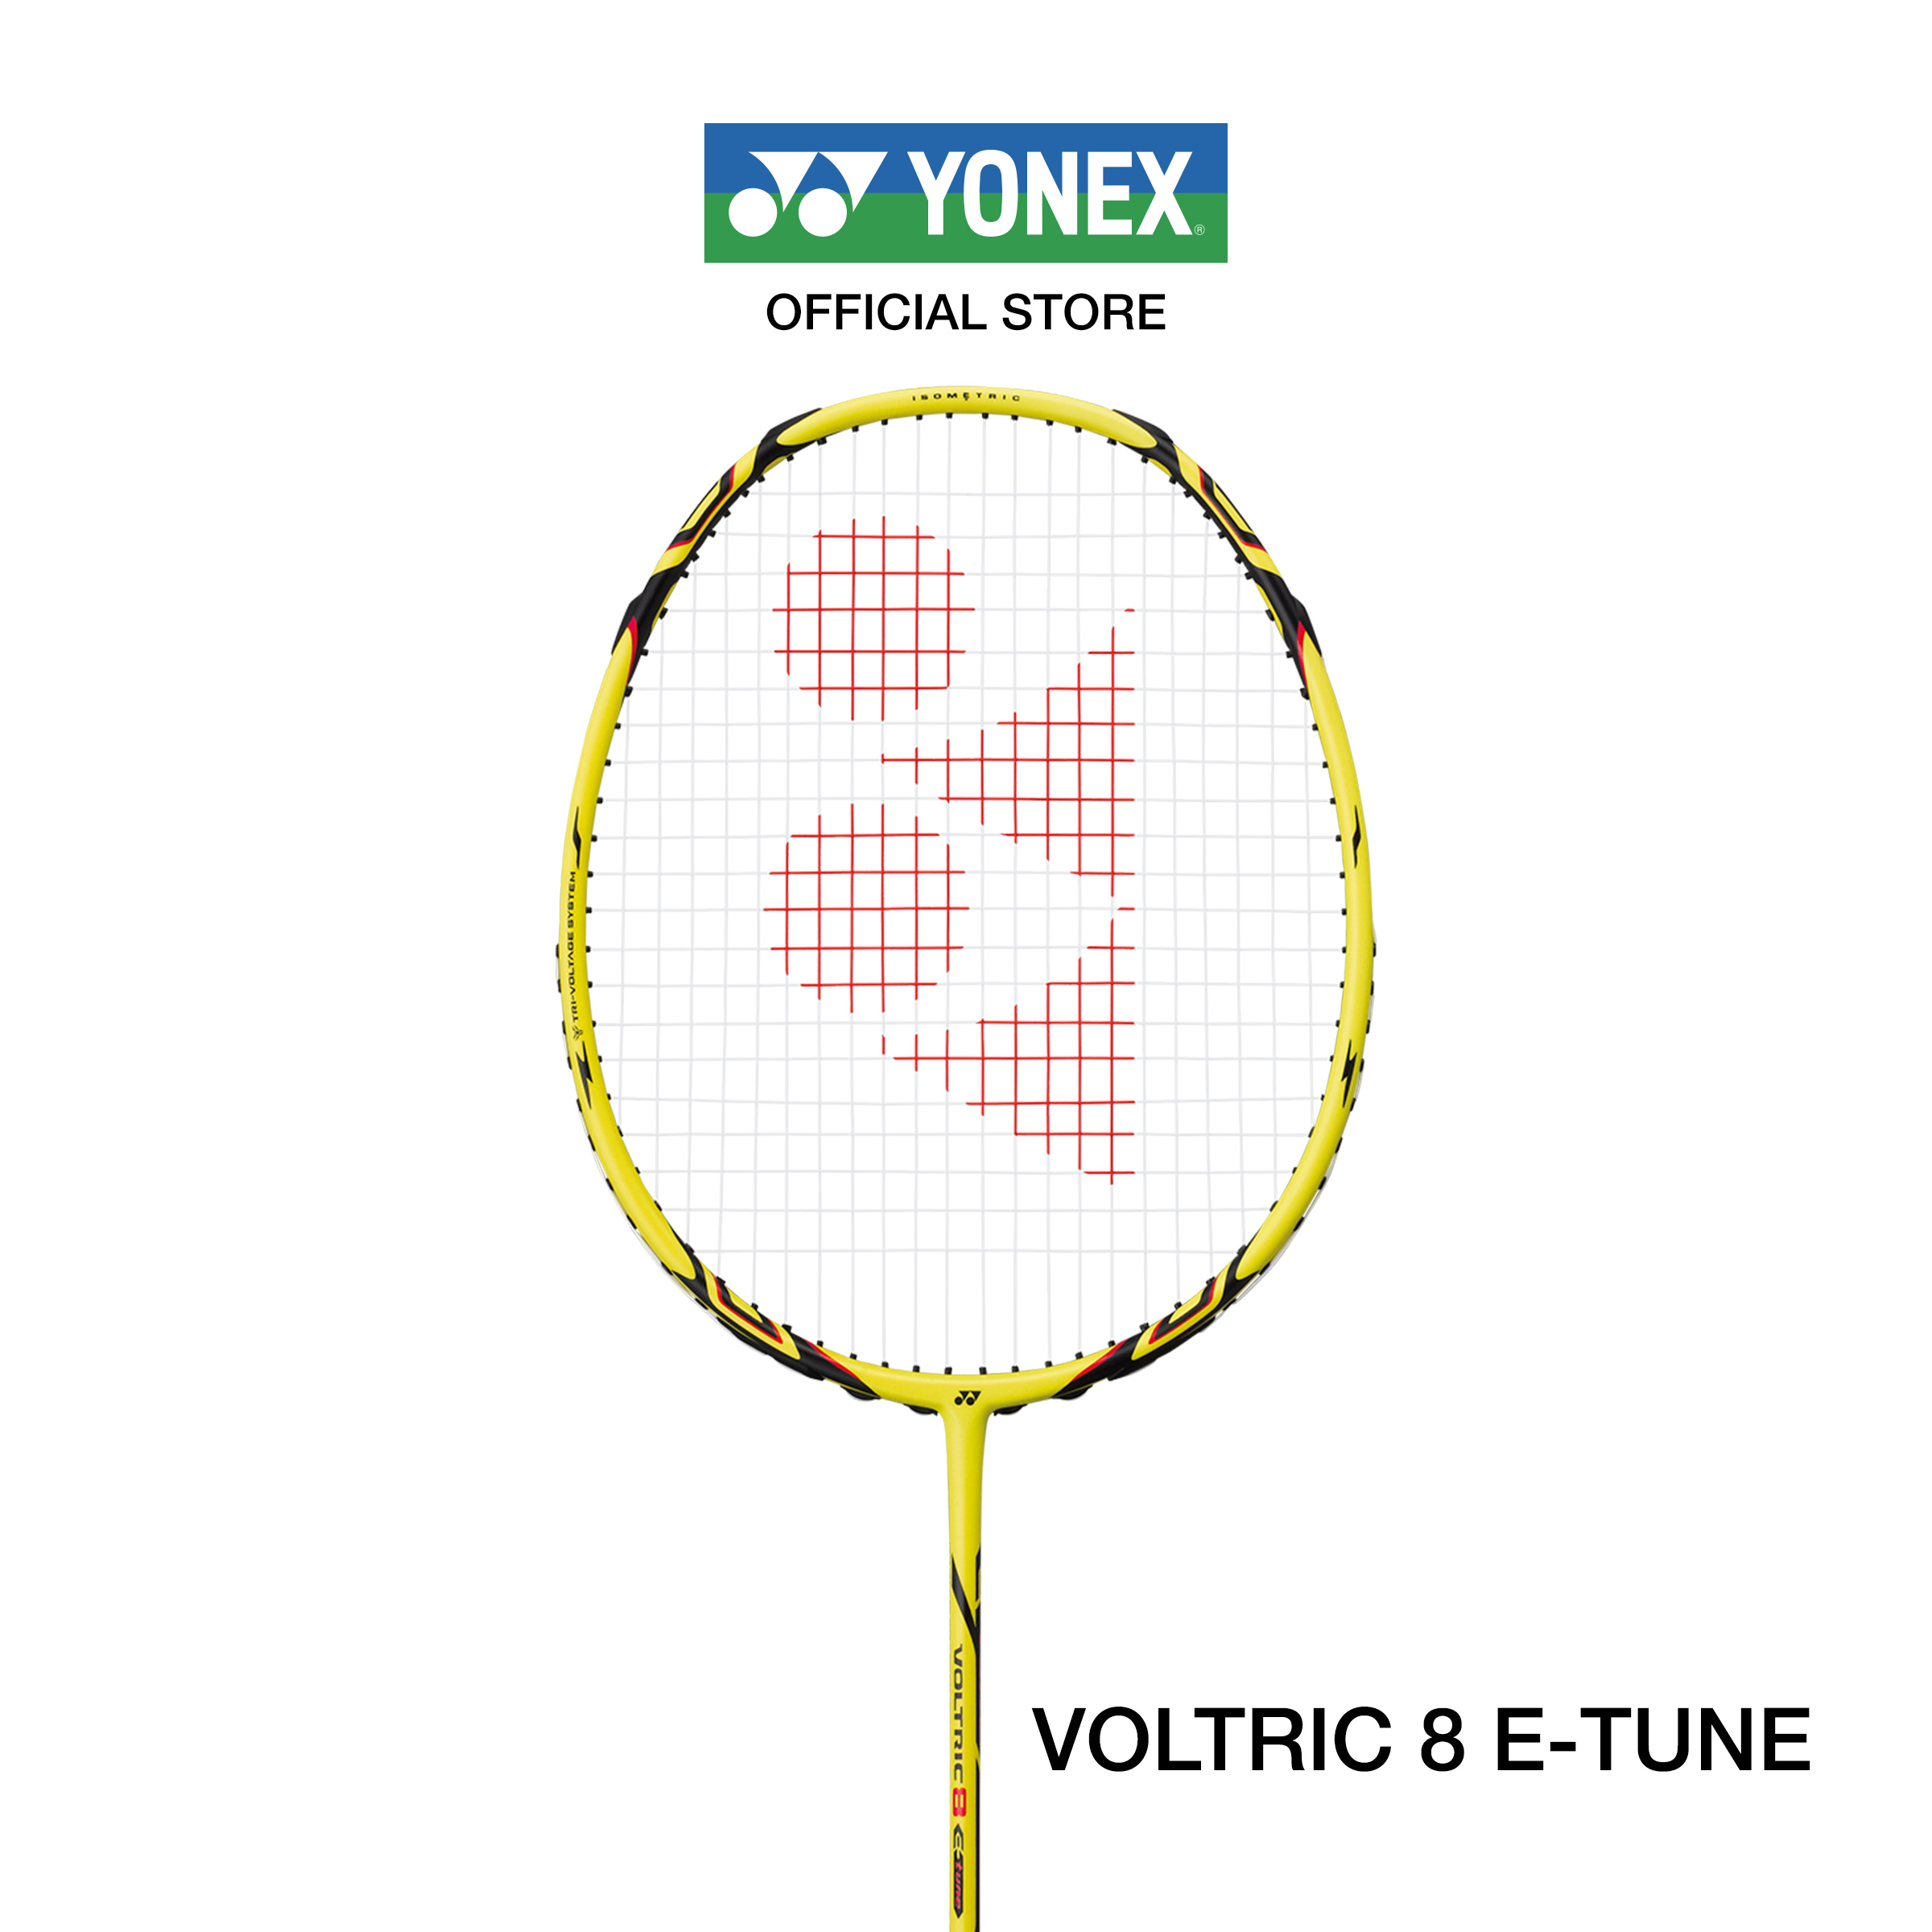 YONEX ไม้แบดมินตันรุ่น VOLTRIC 8 E-Tune น้ำหนัก 4U G5 ไม้หัวหนักก้านกลาง ตาไก่สามารถปรับเปลี่ยนได้ในส่วนบนและล่าง แถมเอ็น BG65